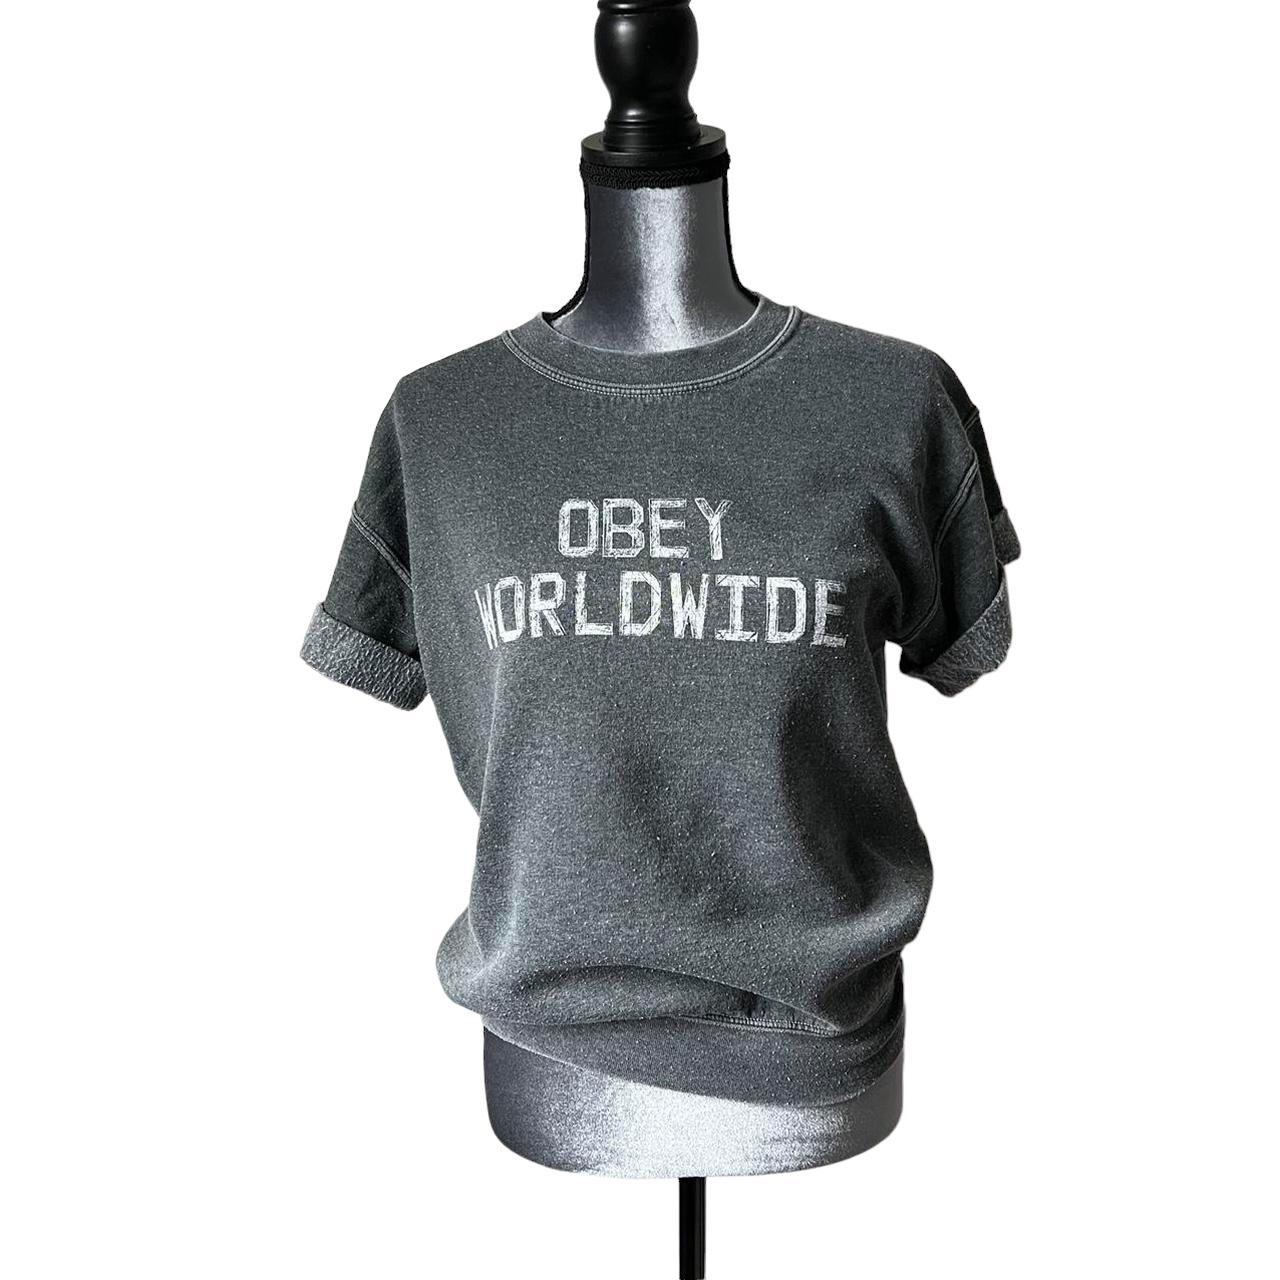 Product Image 1 - Obey shortsleeve sweatshirt with obey